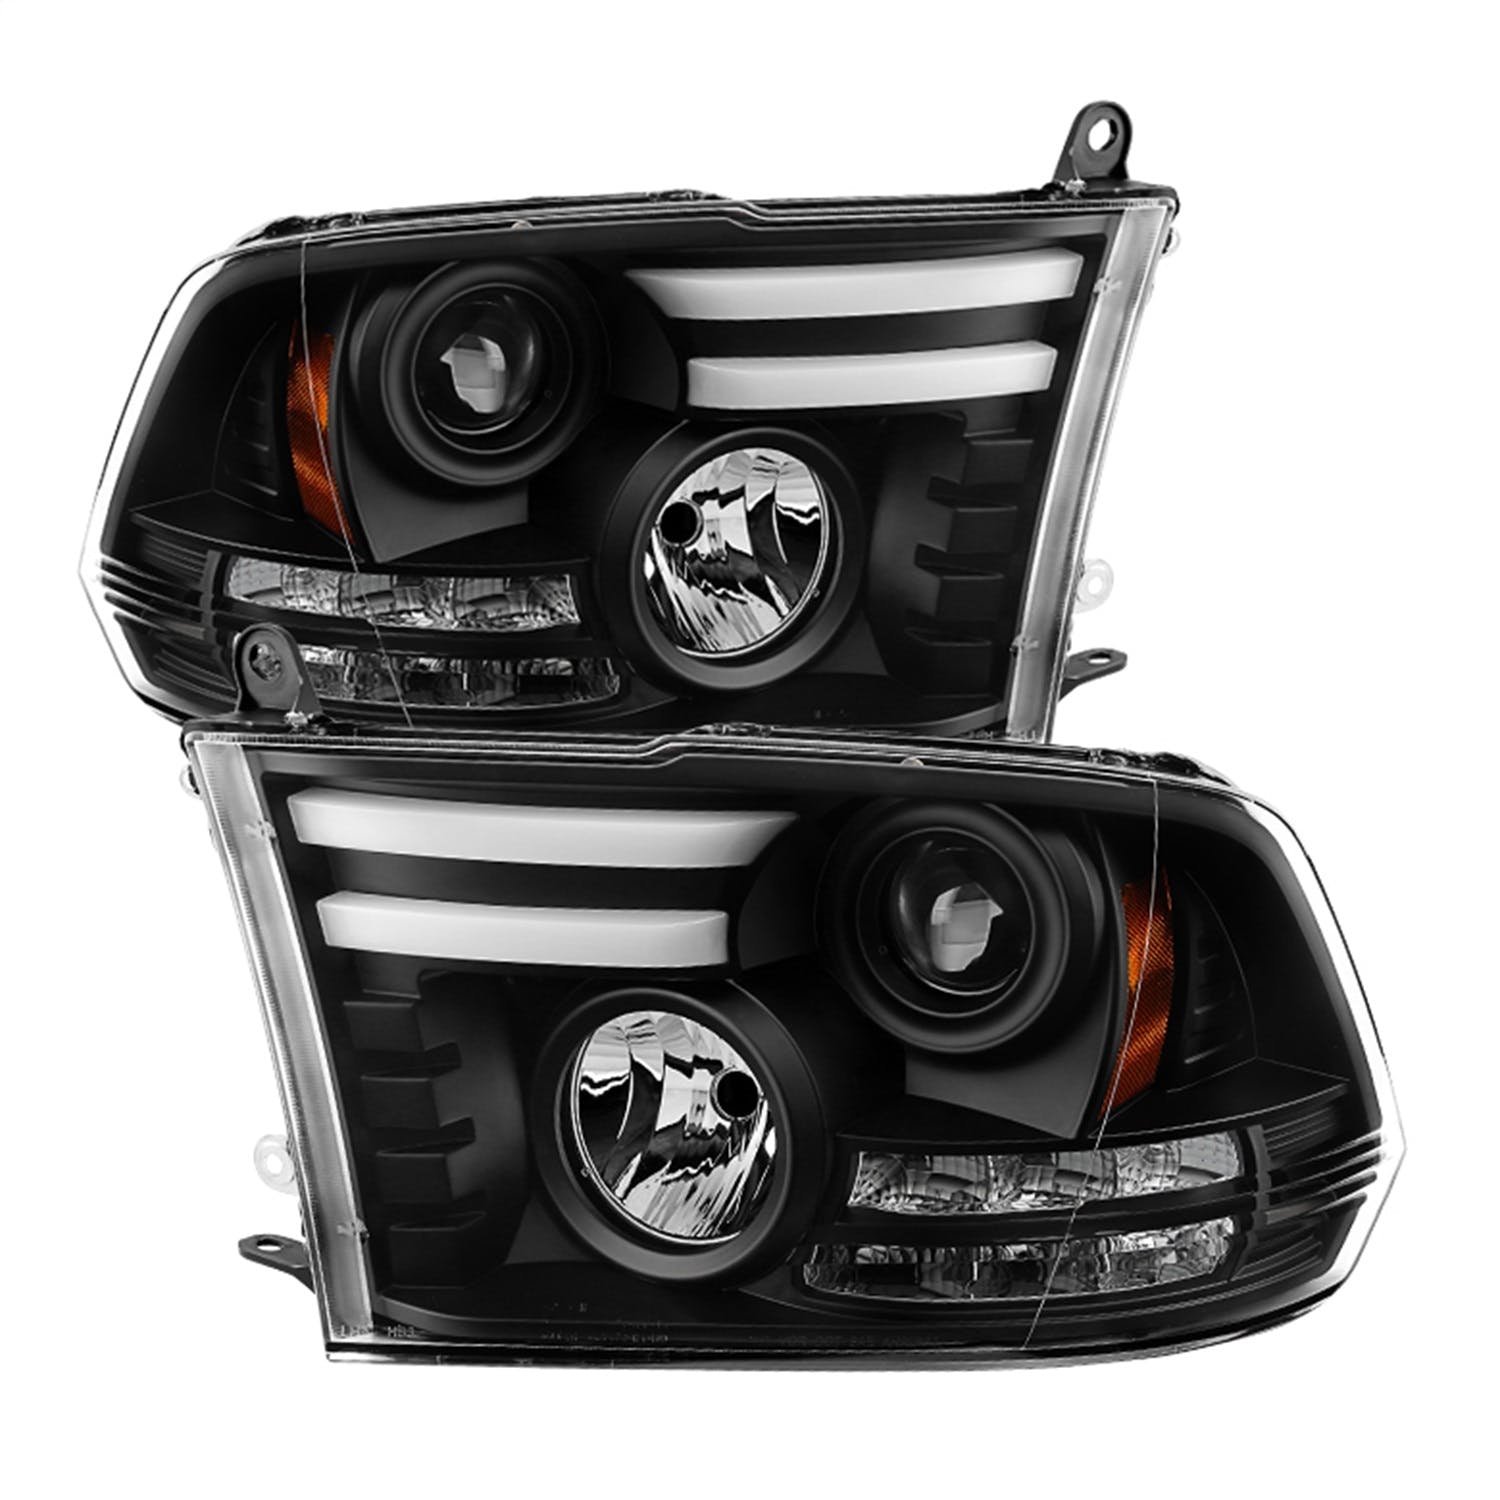 Spyder Auto 5080912 (Spyder) Dodge Ram 1500/2500/3500 13-16 Projector Headlights (Not compatible on